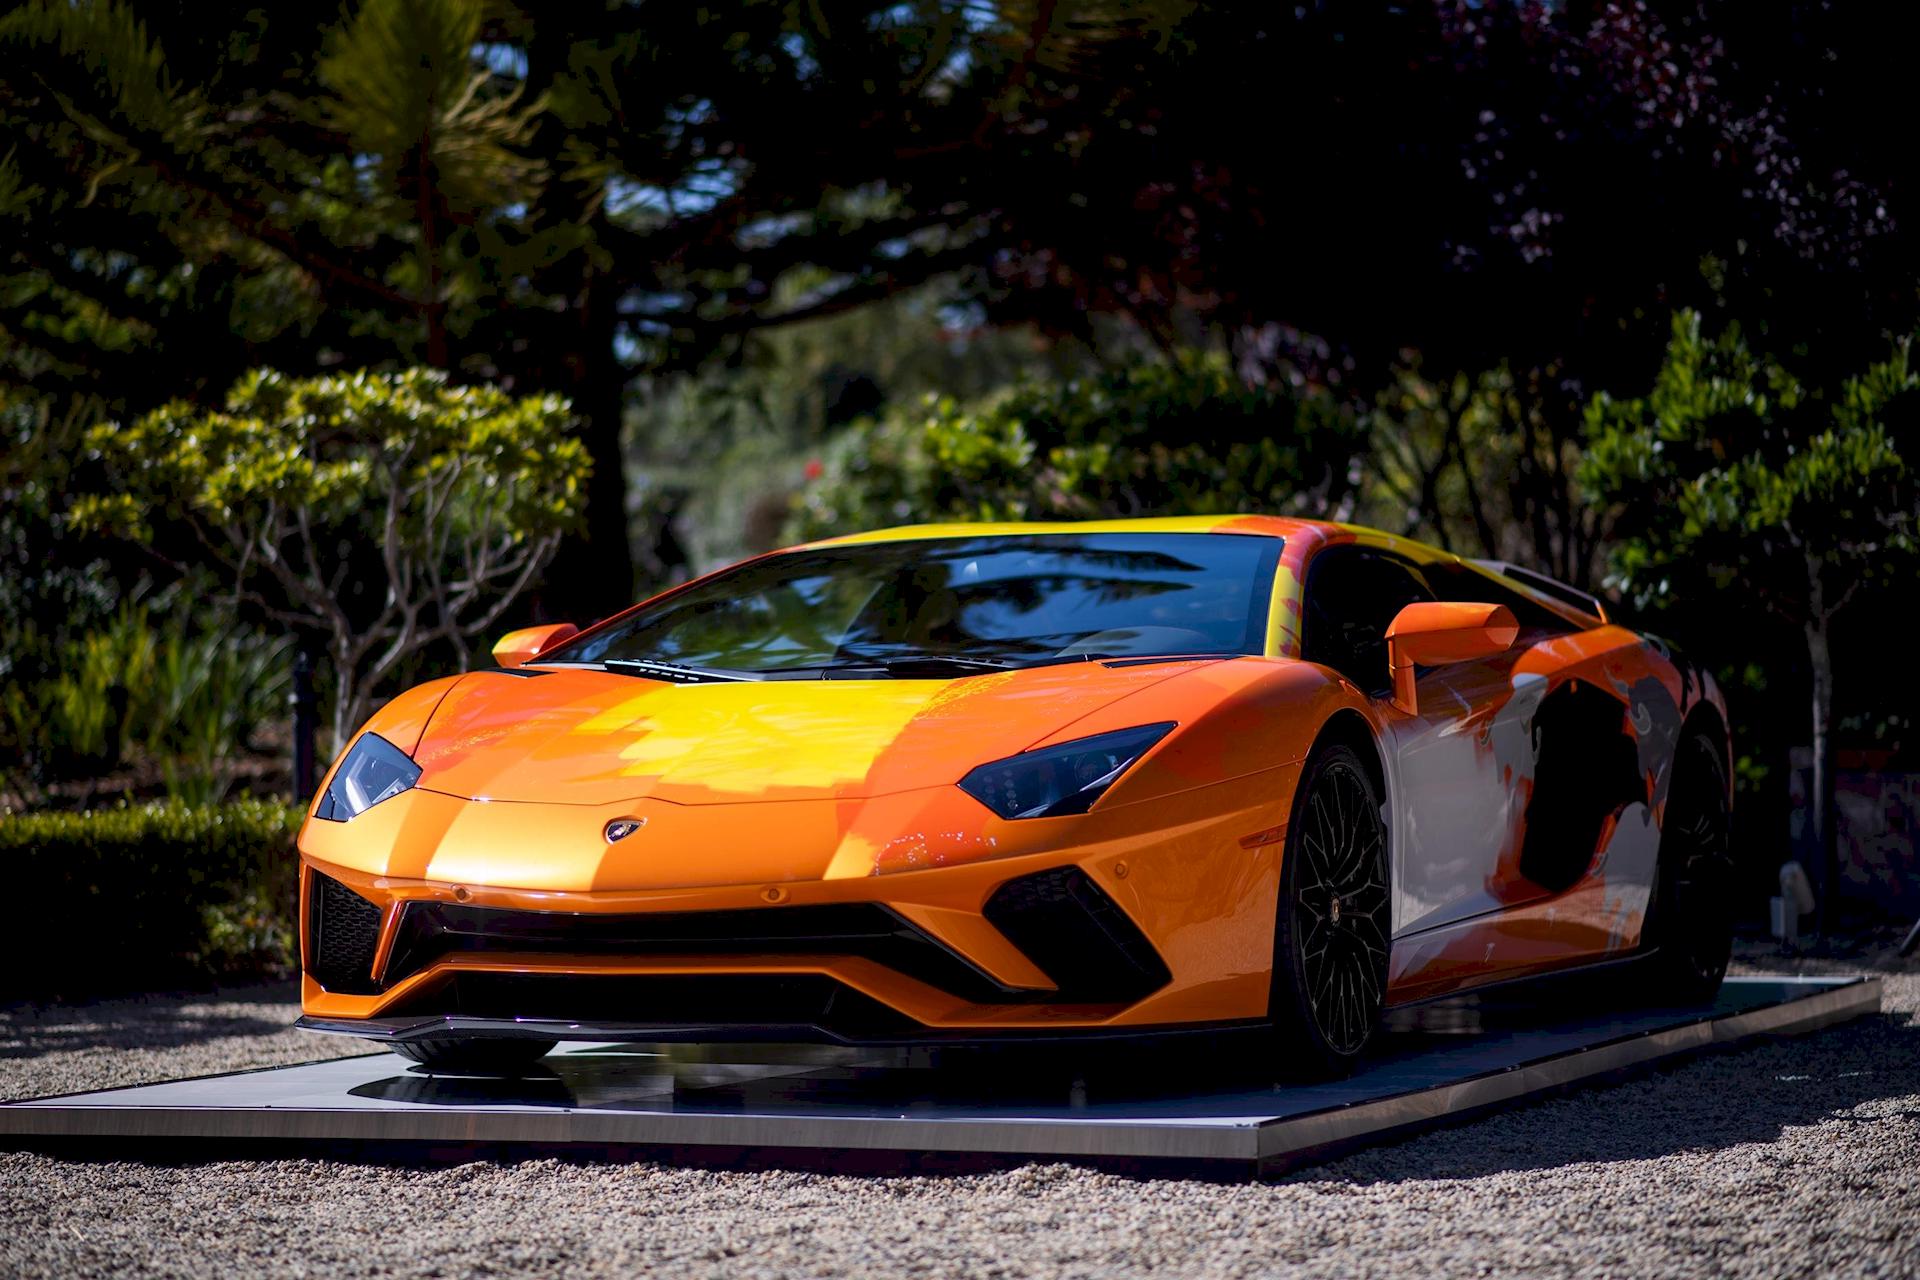 Lamborghini Monterey Car Week 2019